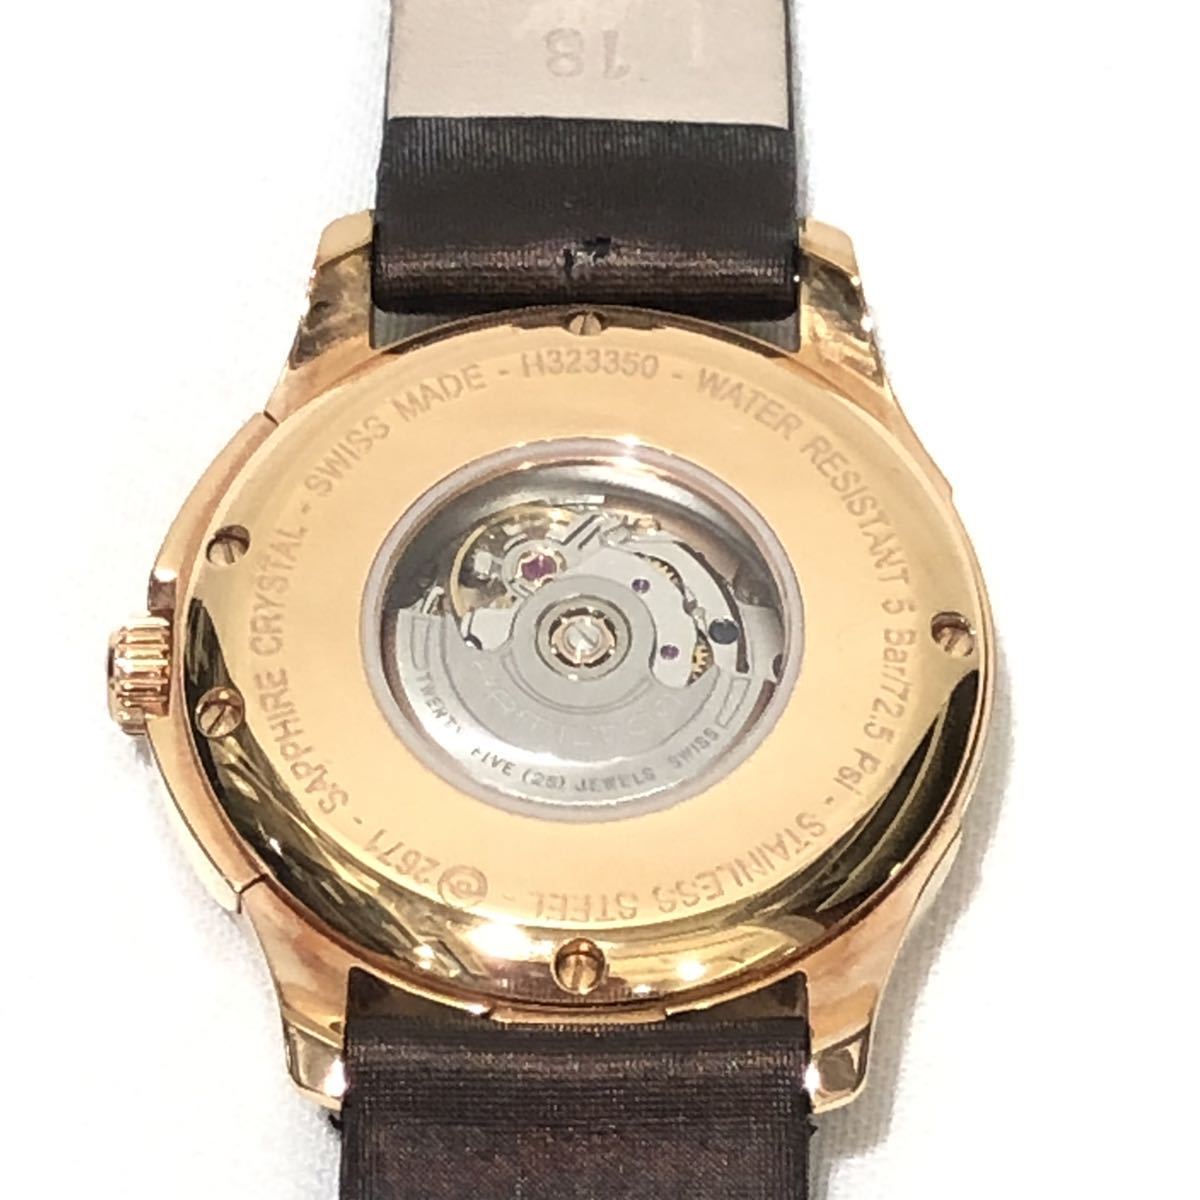 【HAMILTON】腕時計 ハミルトン ジャズマスターオートビューマティック ビューマチック 34mm 自動巻 アナログ 箱付き h323350 ts202112_画像6